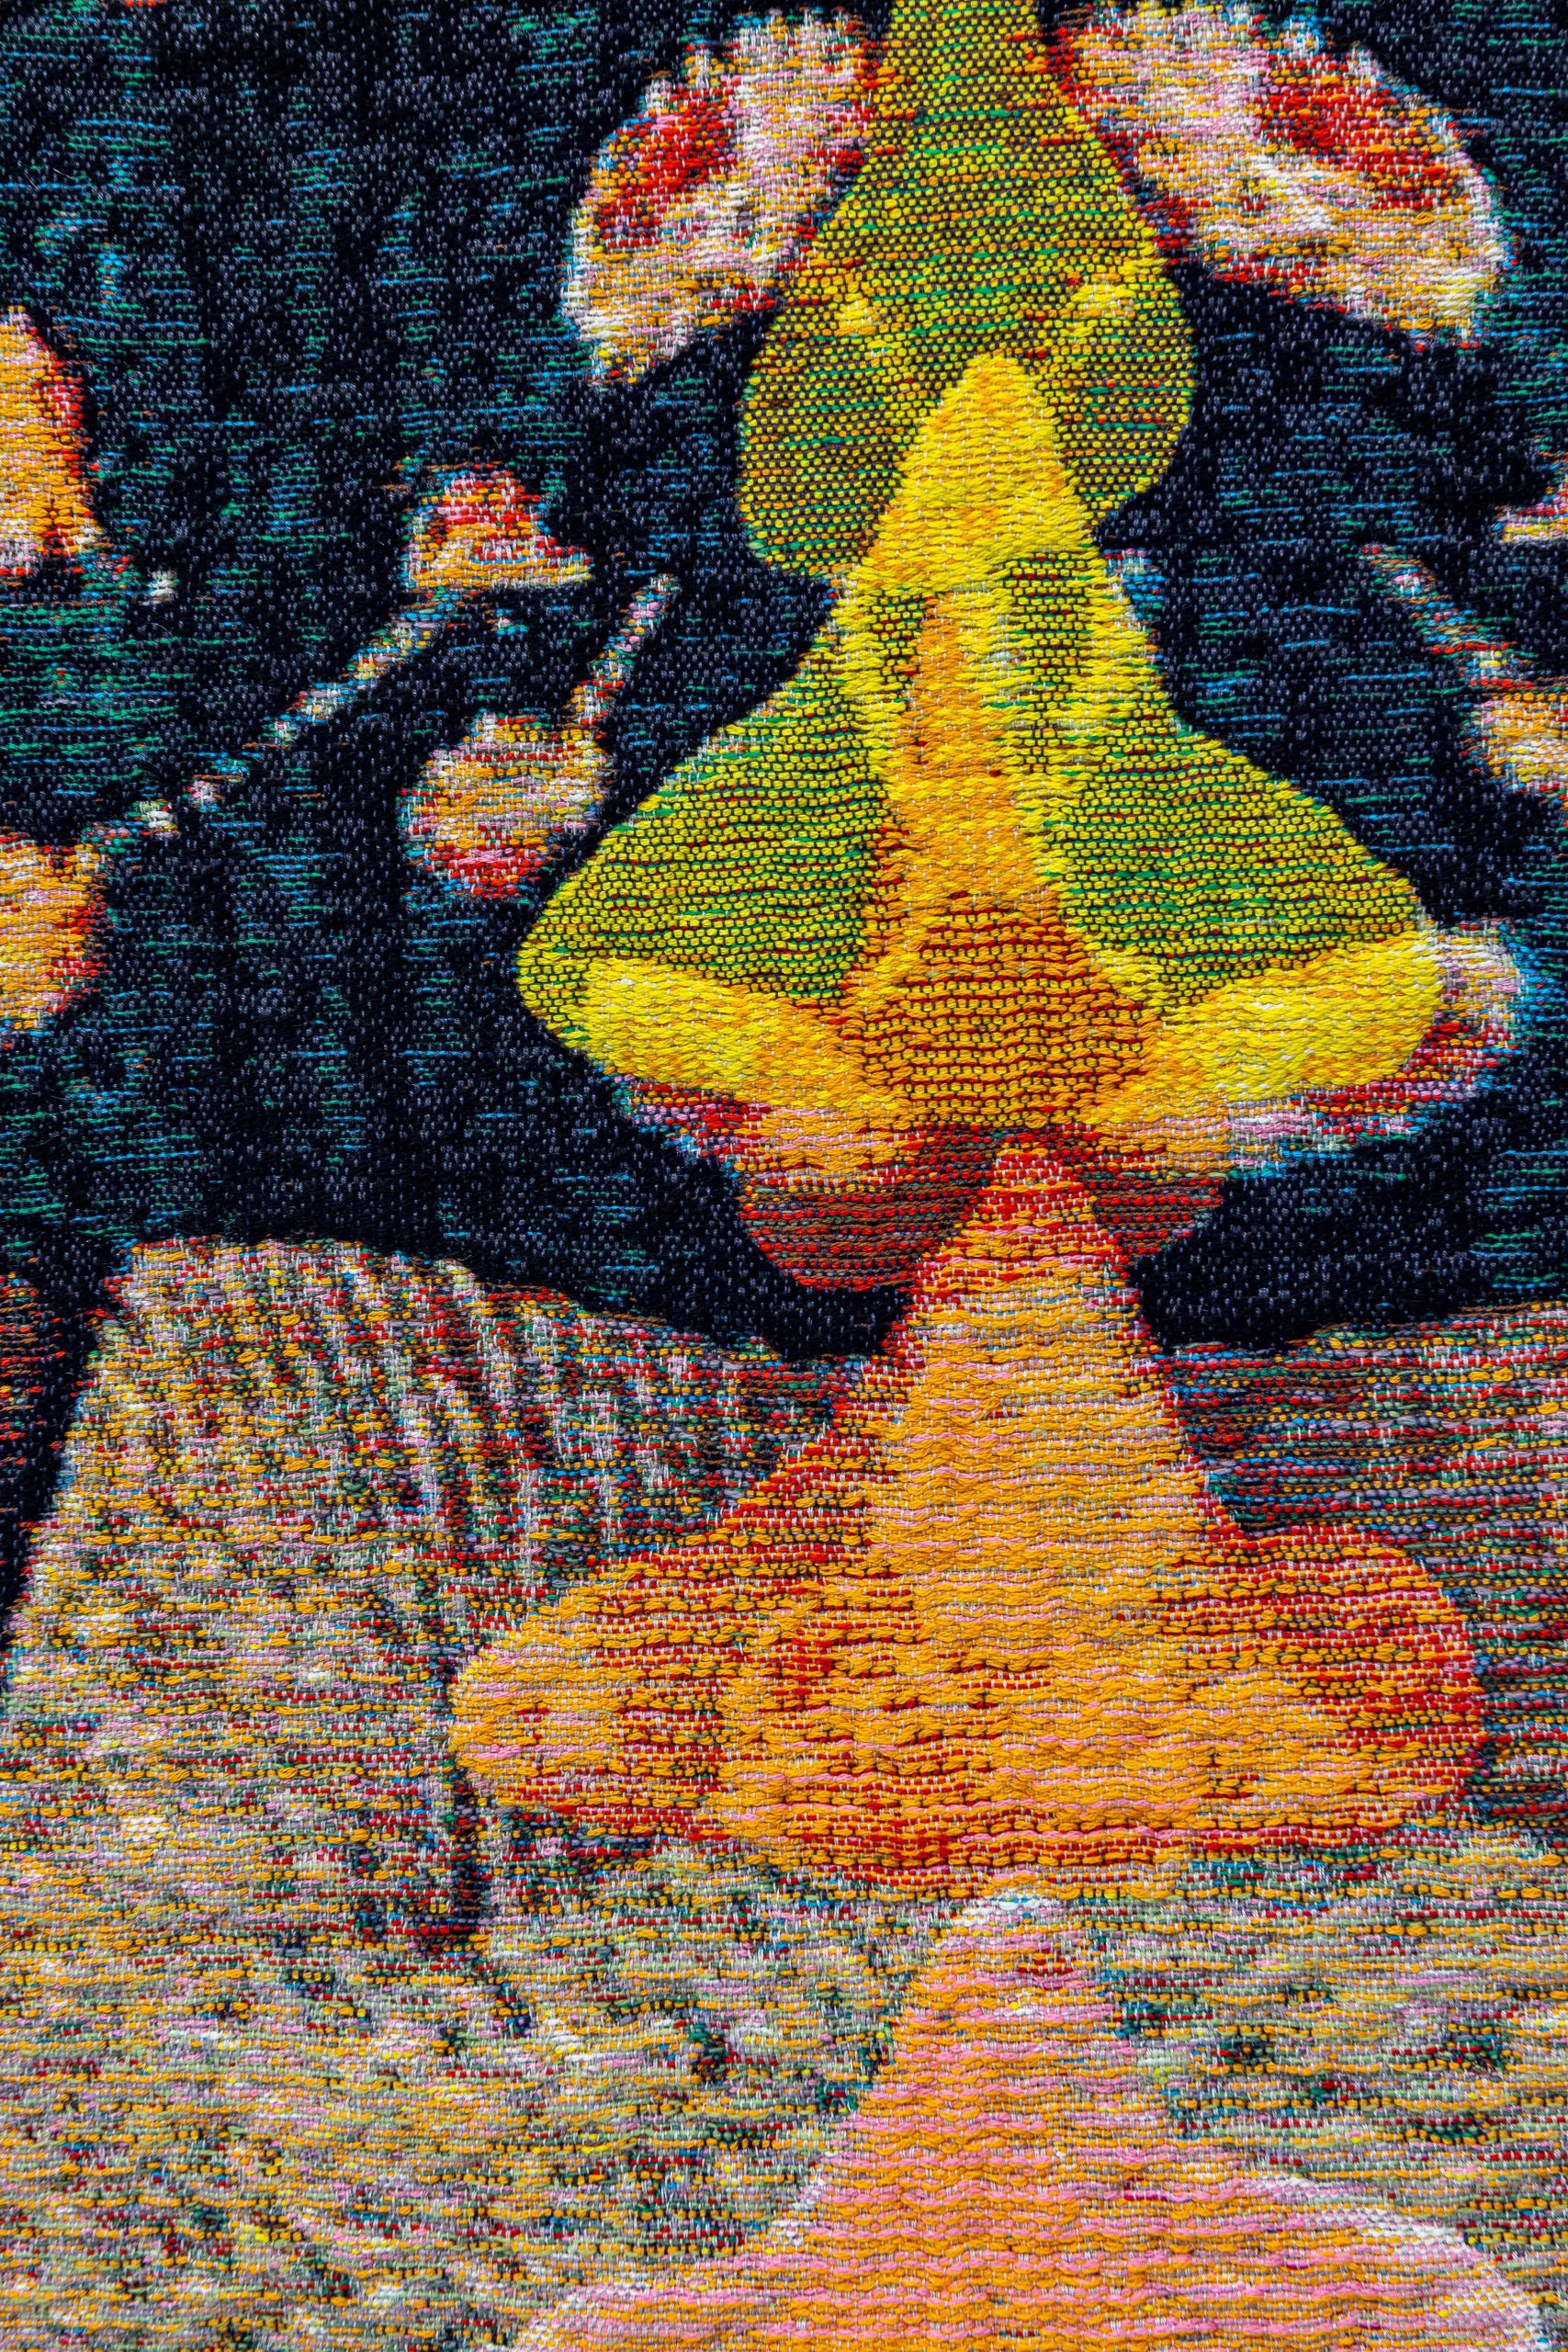 Arazzo Giardino, 2012, tapestry (wool, cotton, silk), 120x95 cm, detail